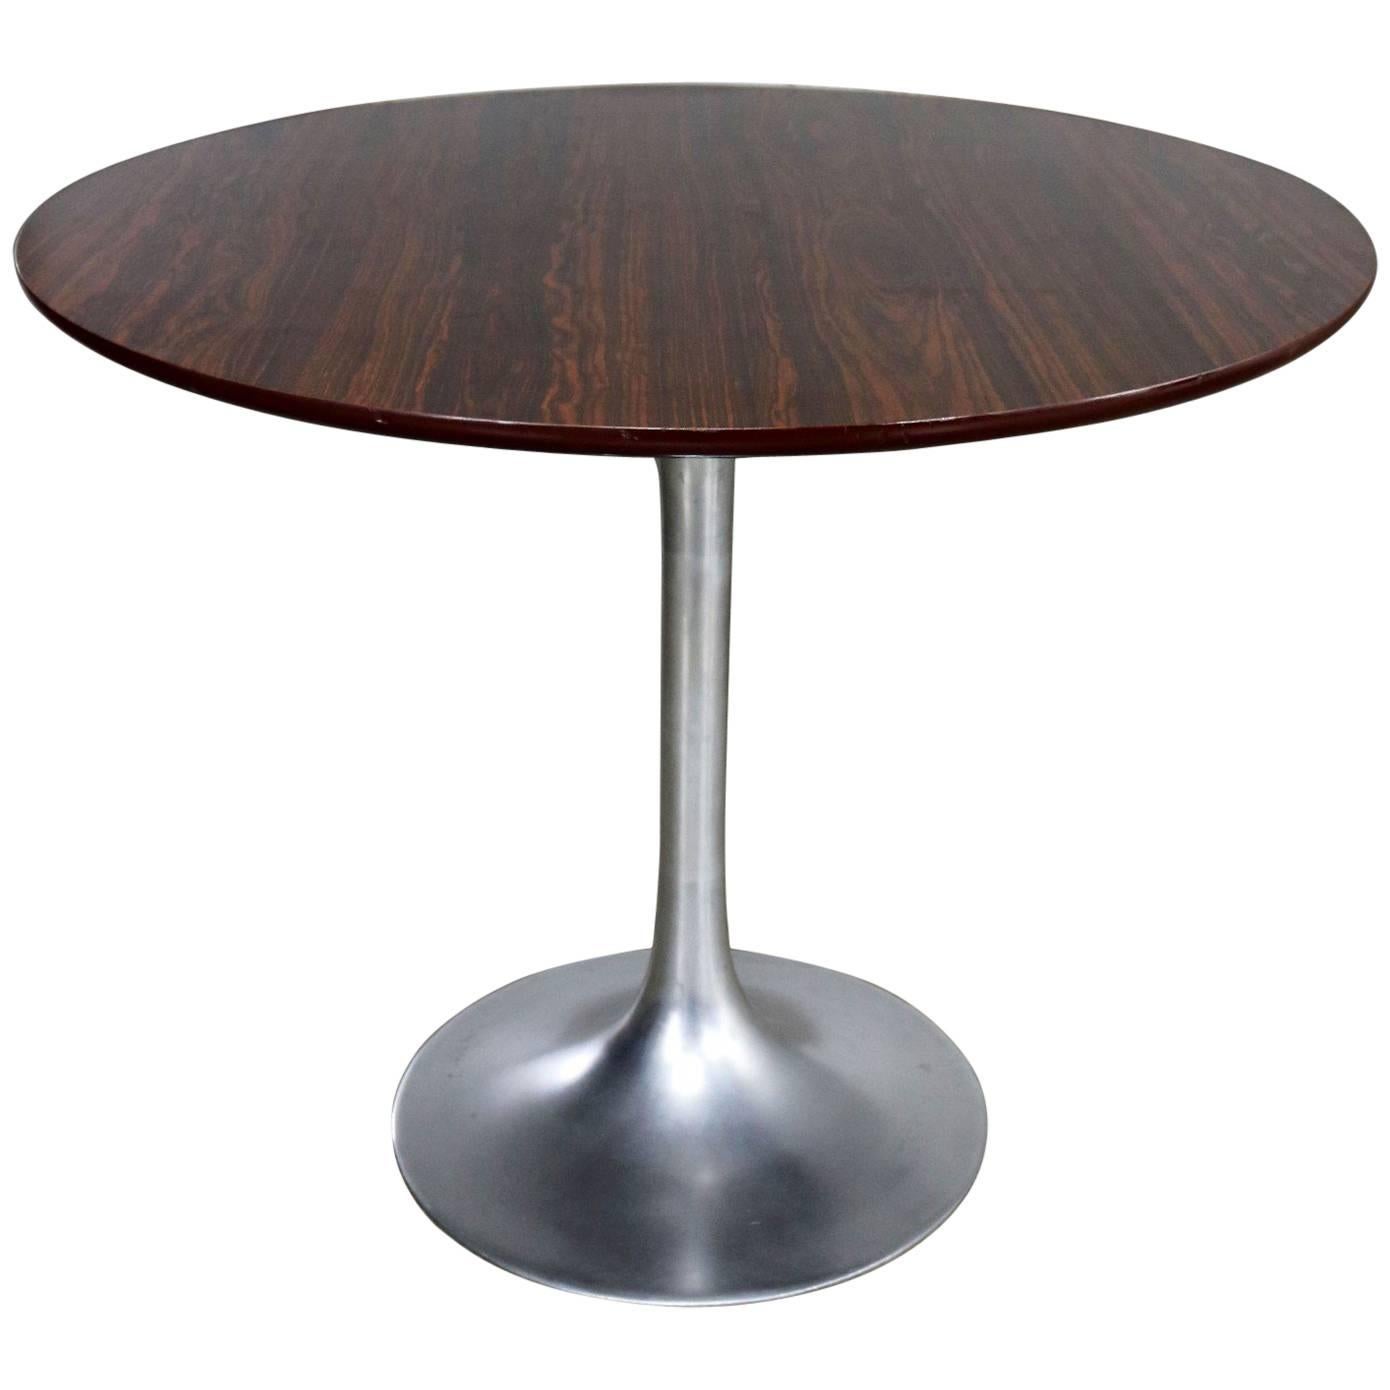 Saarinen Style Tulip Base Table in Aluminum with Wood Grain Laminate Top